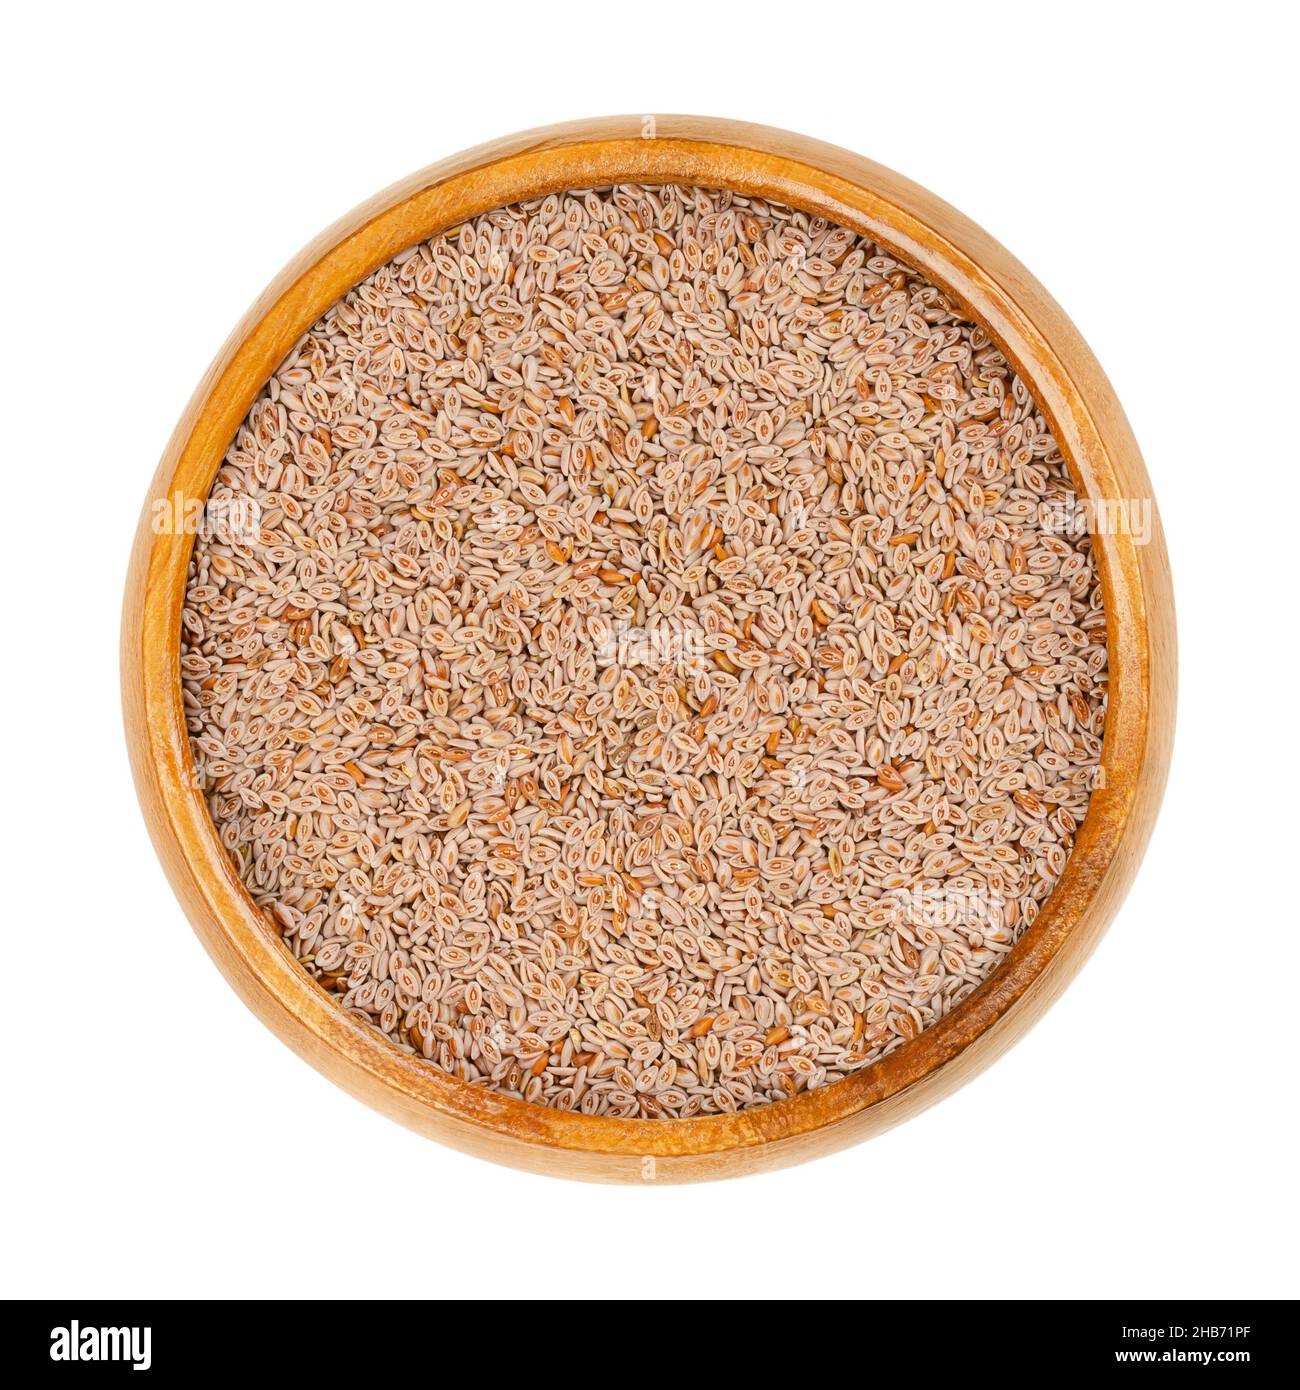 Whole psyllium seeds, in a wooden bowl. Plantago ovata, known as blond plantain, desert Indianwheat, blond psyllium, and ispagol. Stock Photo